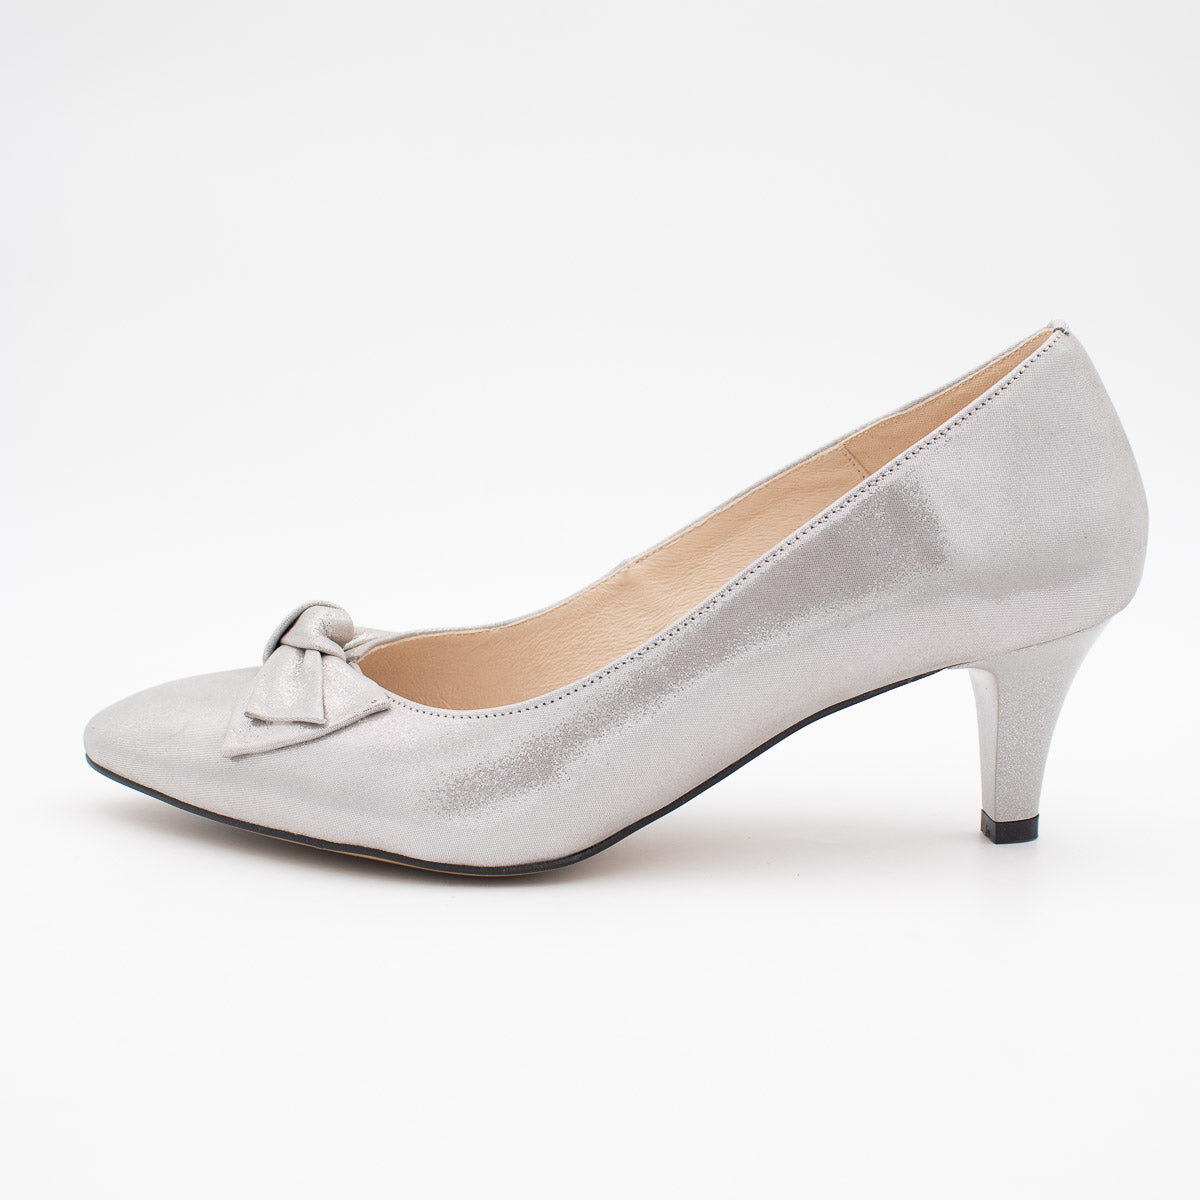 Regina' Silver Glitter Low Heel Cross Strap Court Shoes by Paradox London |  Look Again